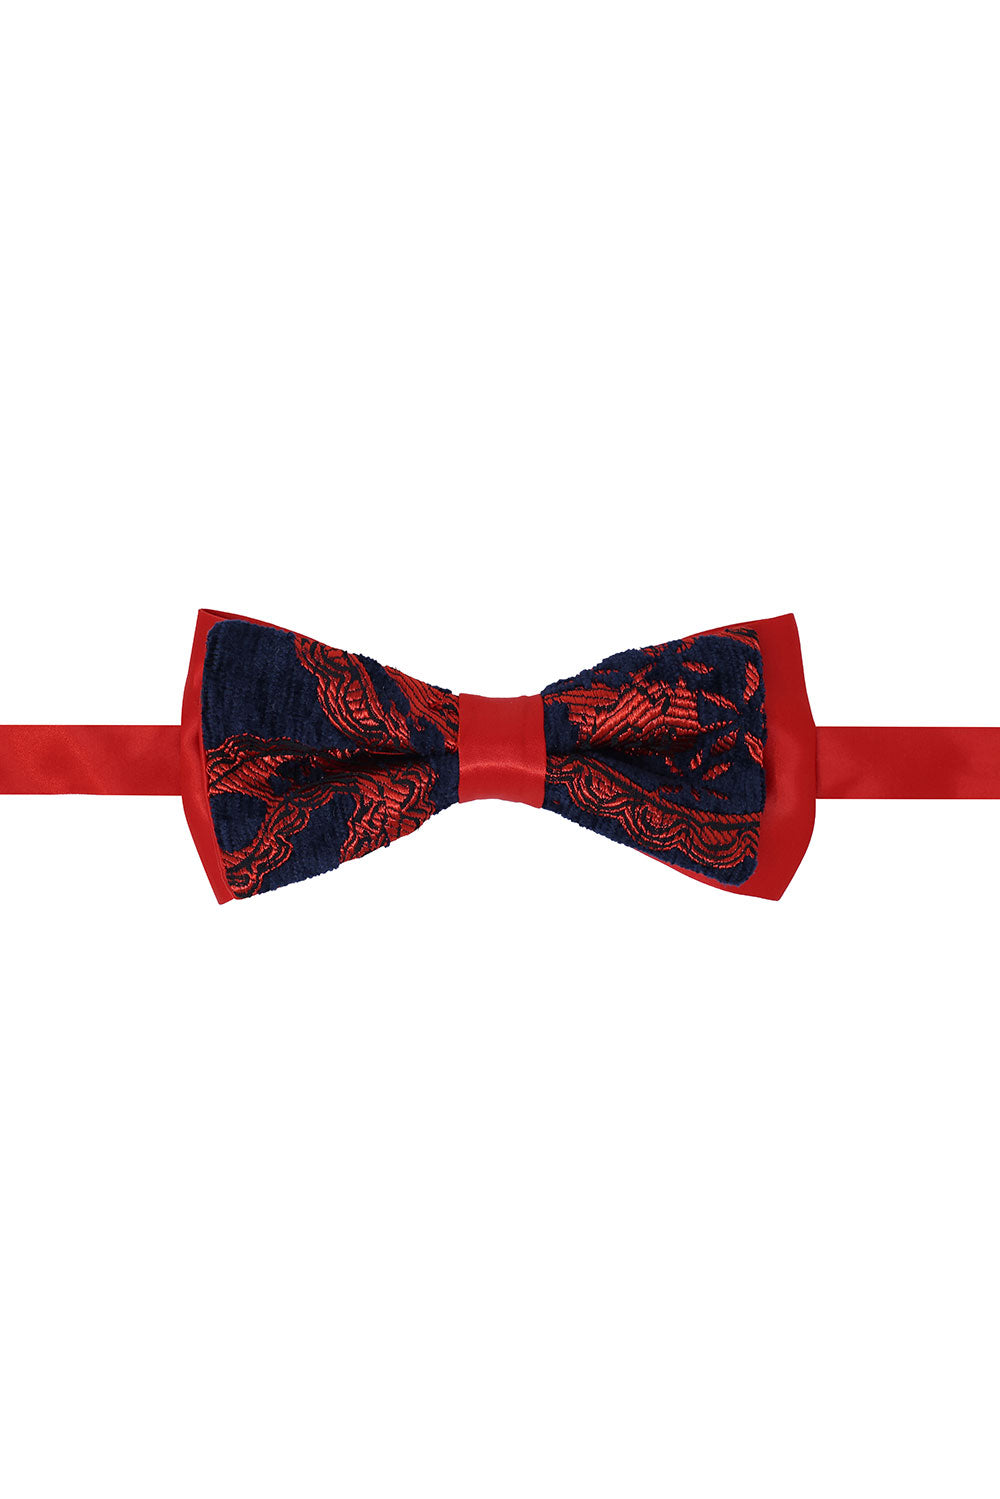 BARABAS Men's Paisley Pattern Design Bow Tie 2BW3101 Red